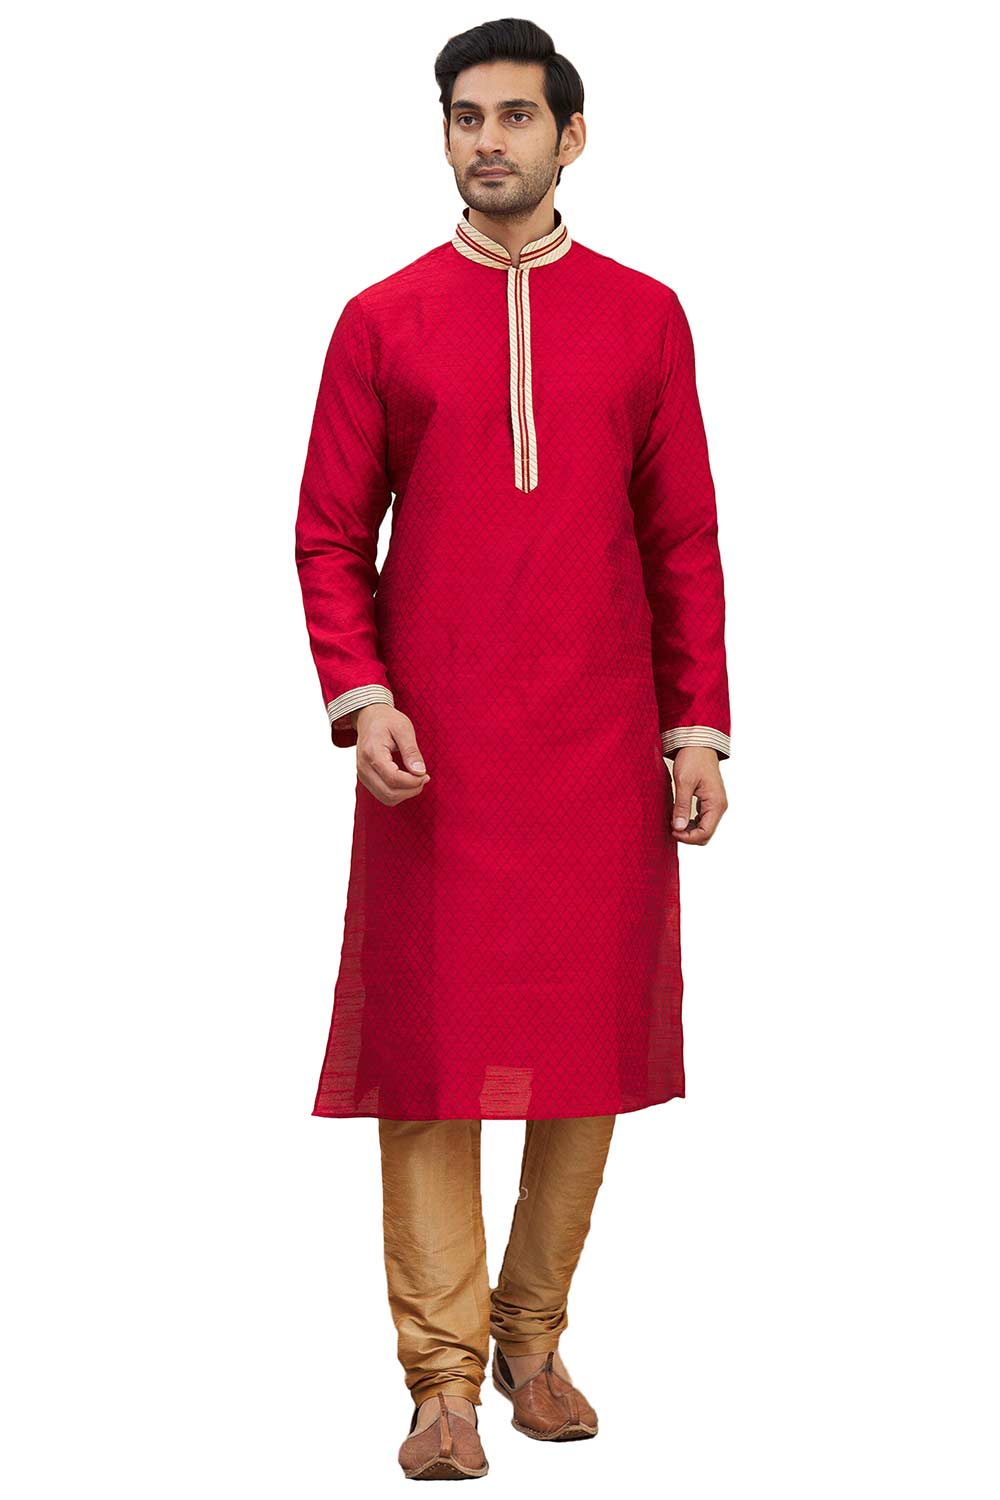 Men's Red Cotton Embroidered Full Sleeve Kurta Churidar